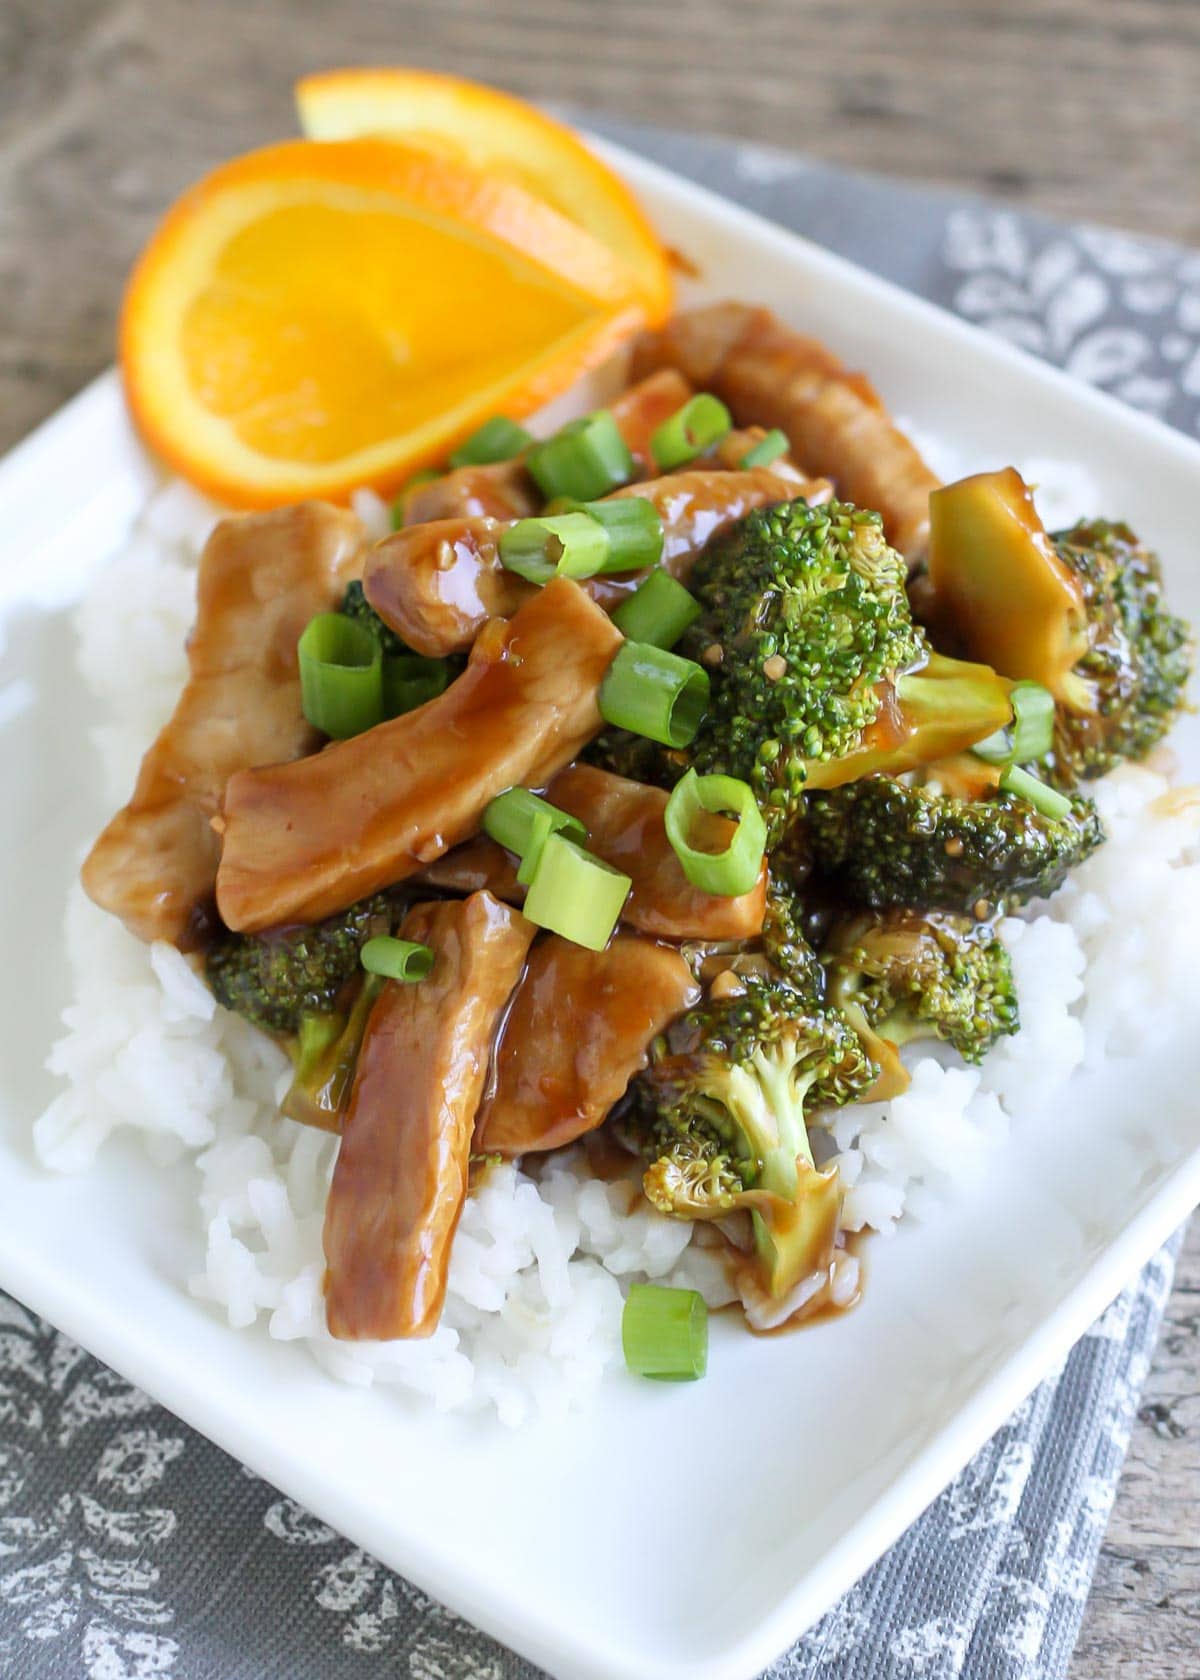 Pork and broccoli stir fry recipe